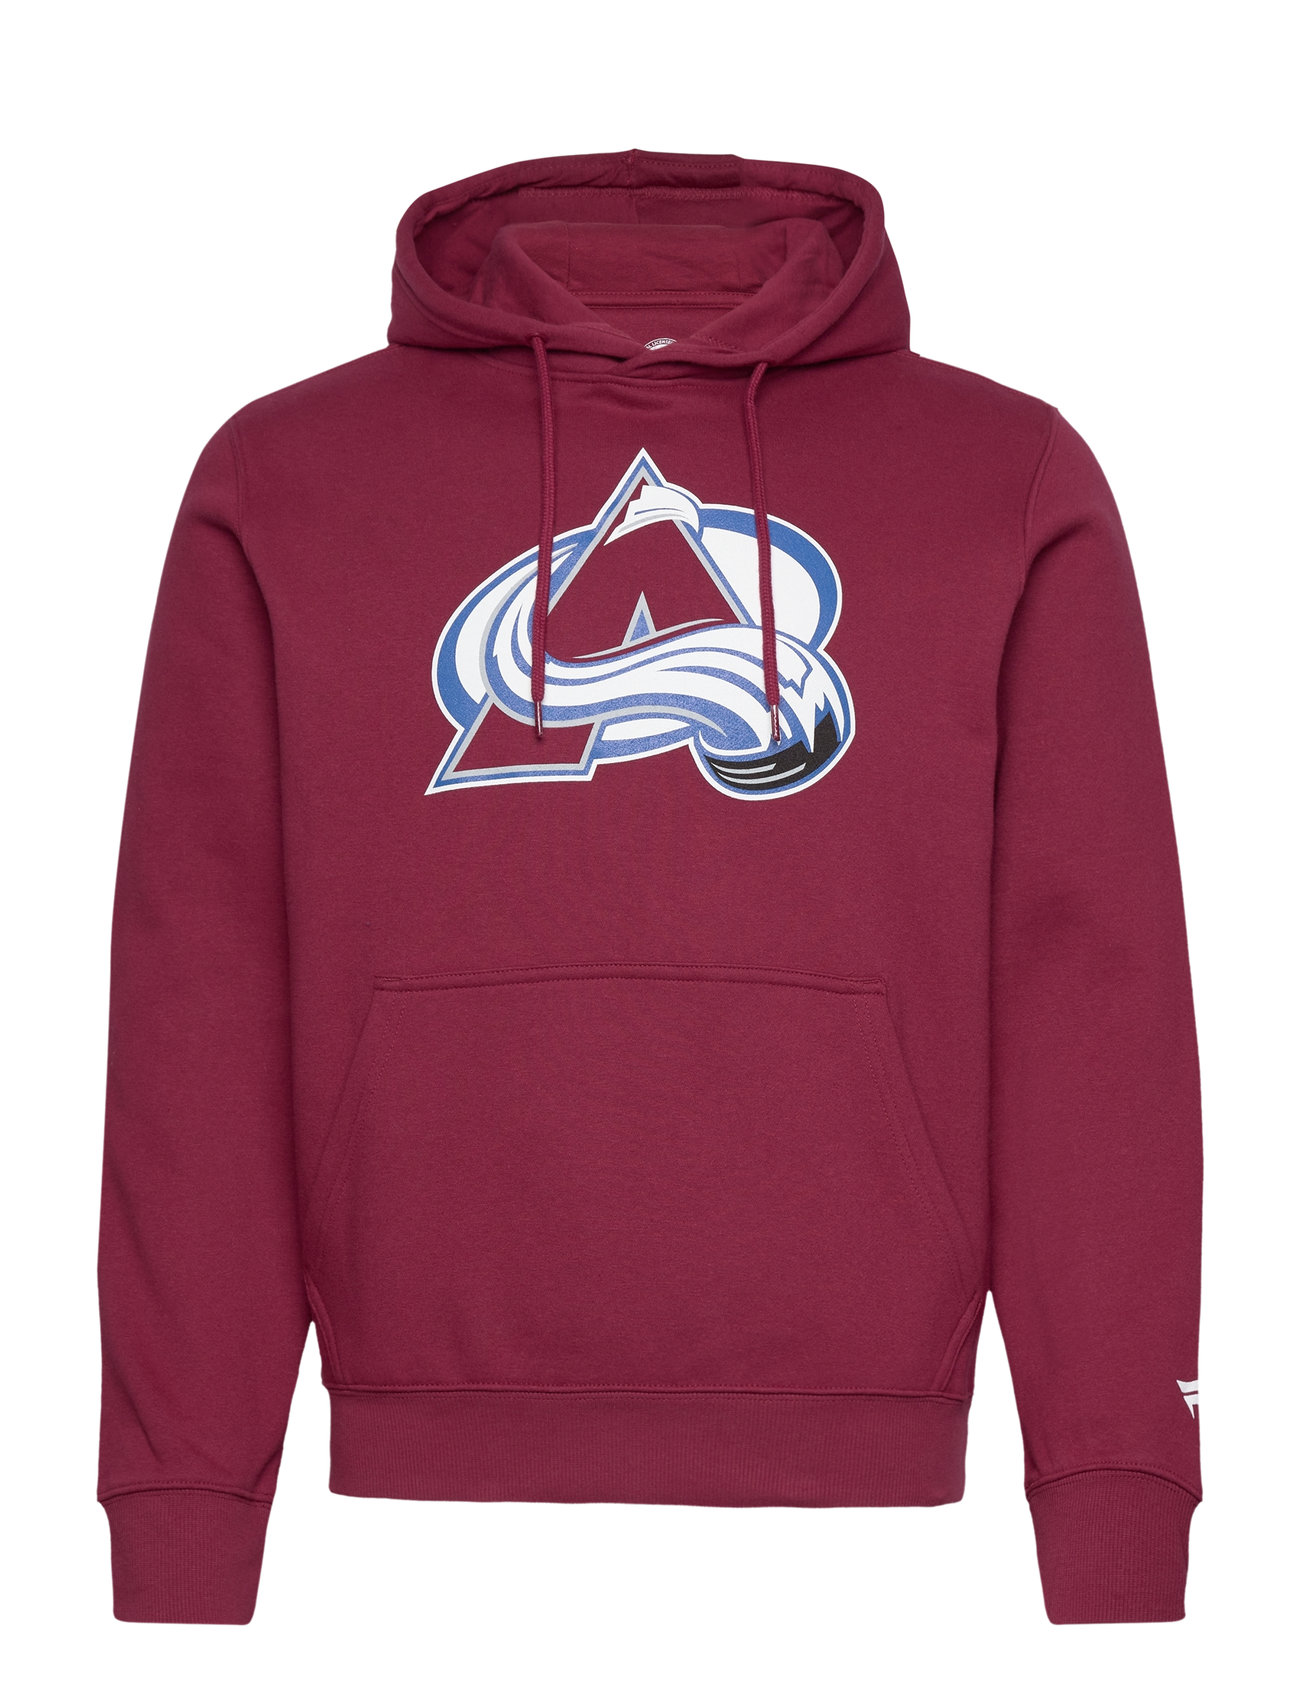 Colorado Avalanche Primary Logo Graphic Hoodie Tops Sweatshirts & Hoodies Hoodies Burgundy Fanatics